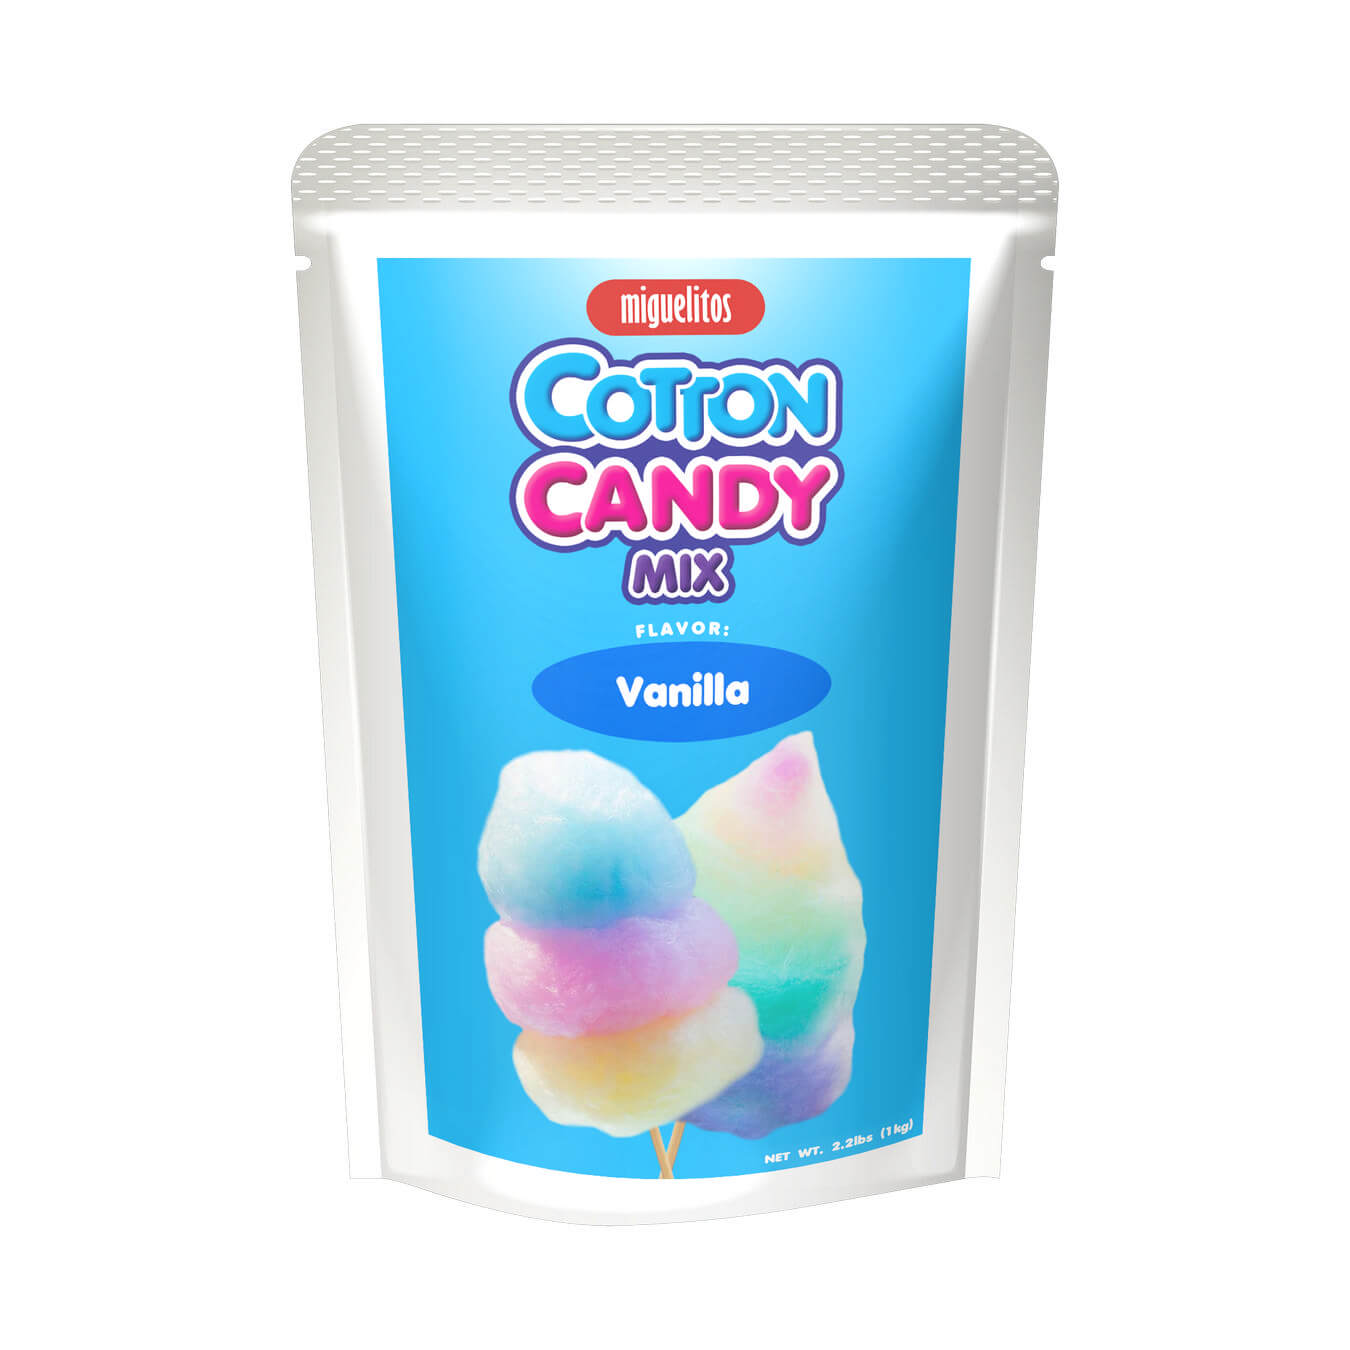 Cotton Candy Mix Vanilla